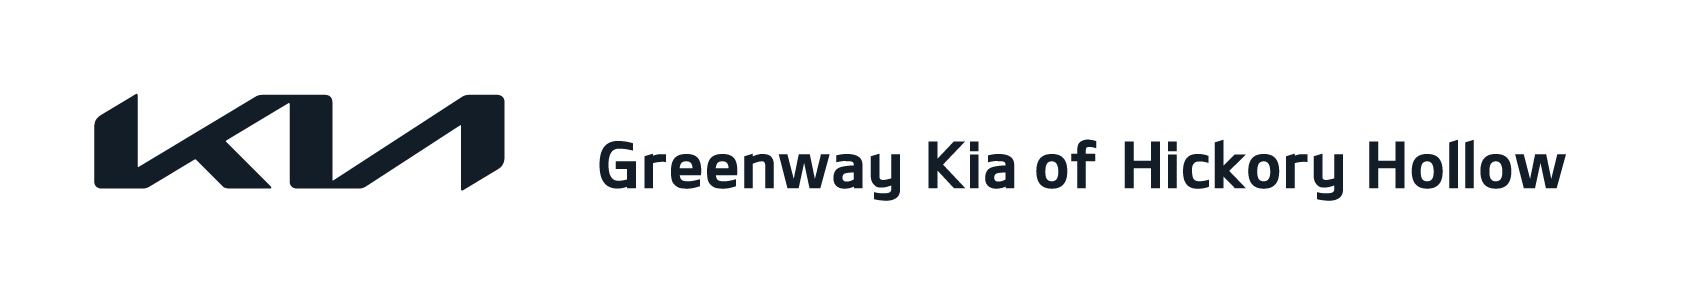 Greenway Kia of Hickory Hollow